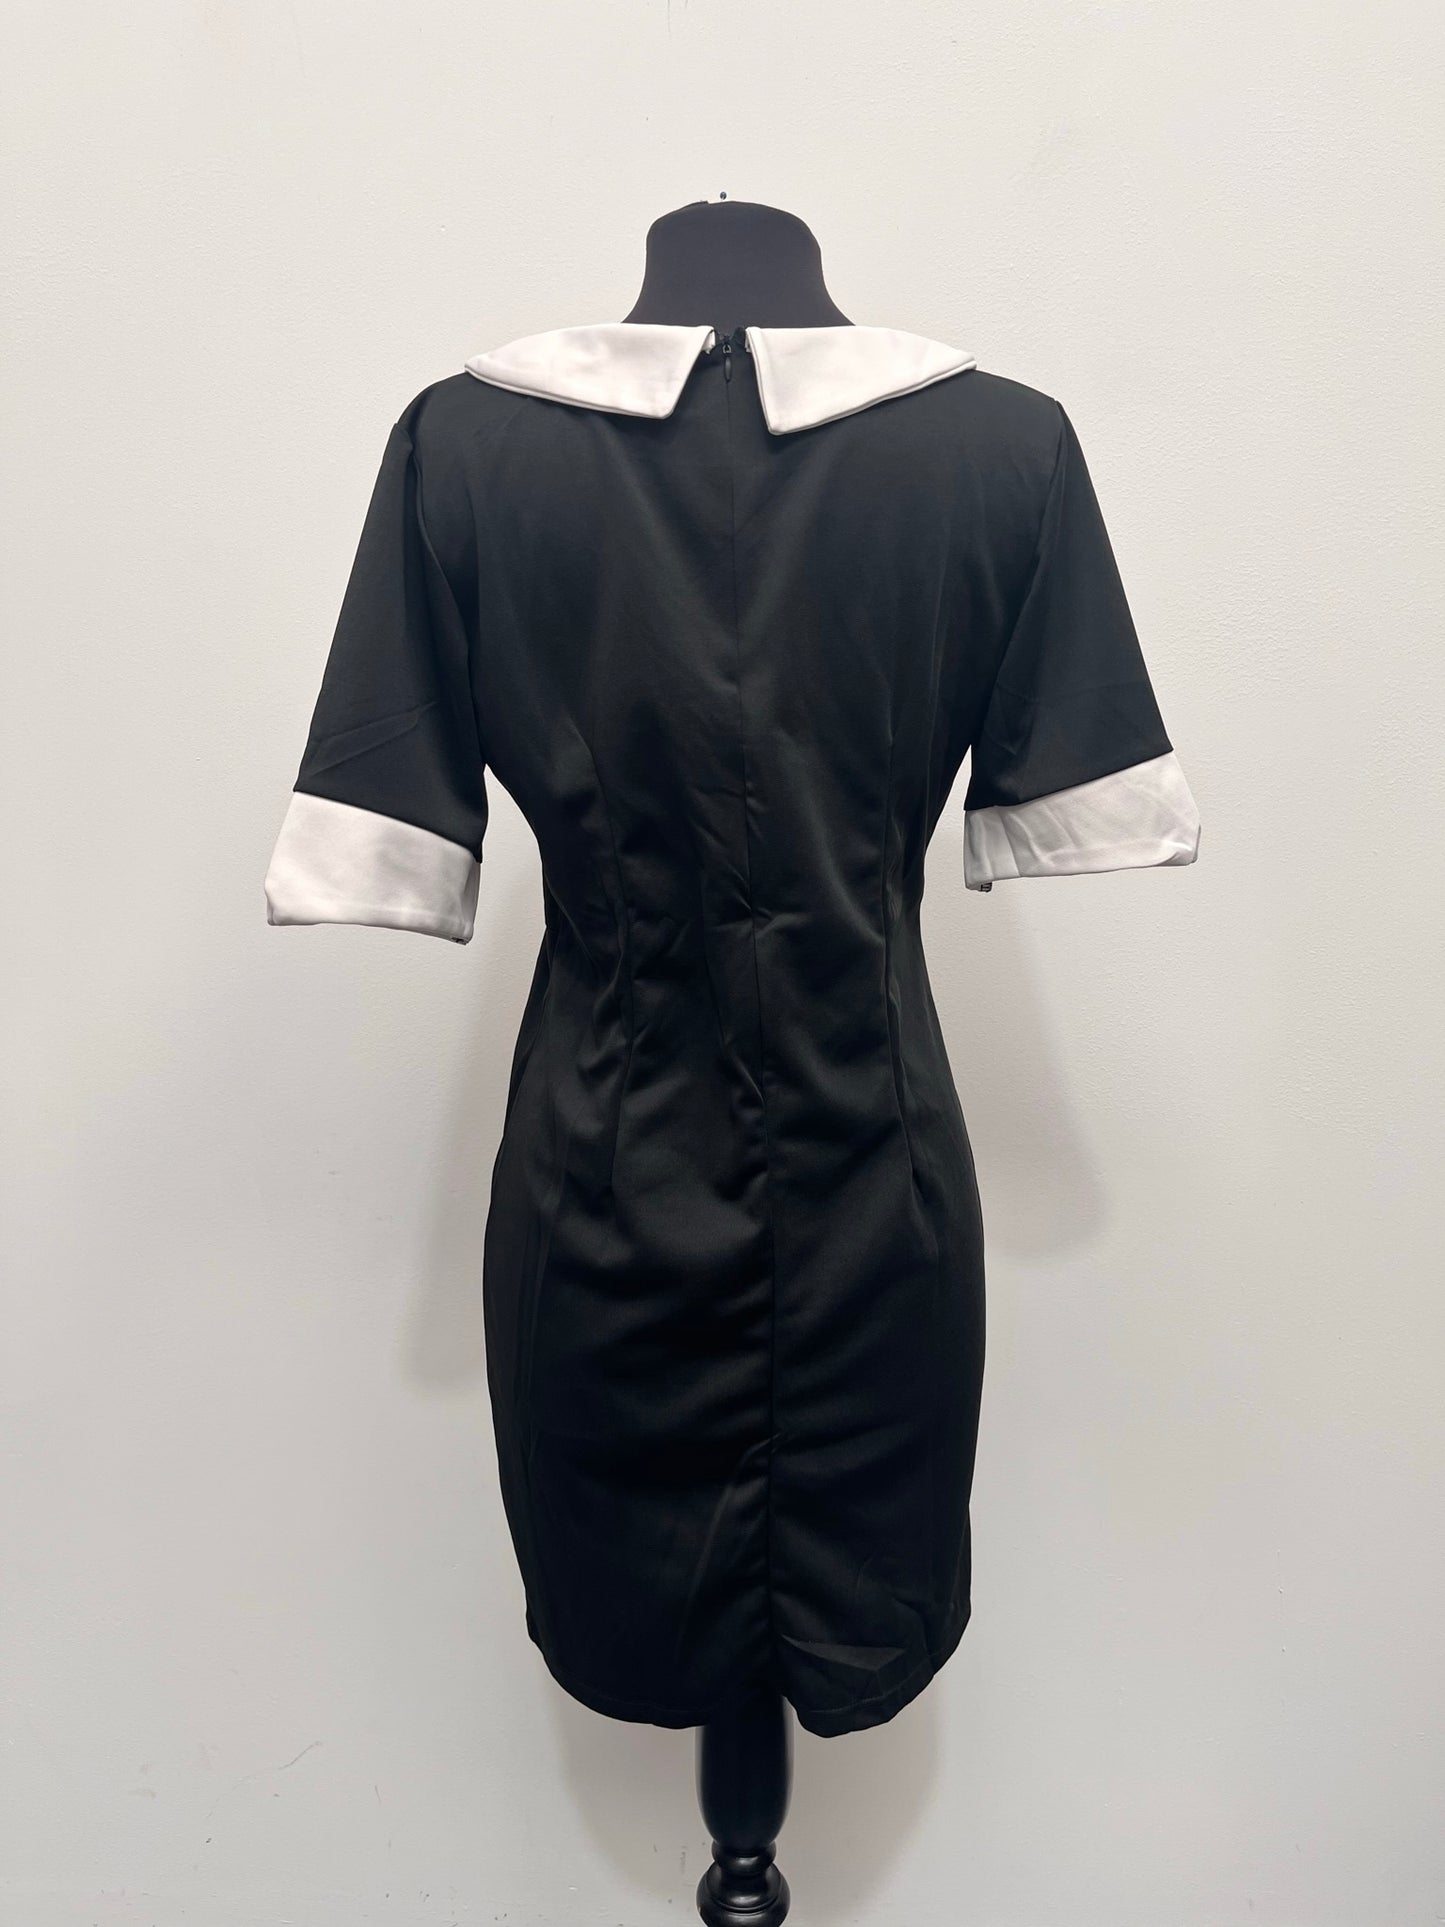 60s 70s Black & White Dress Size 14